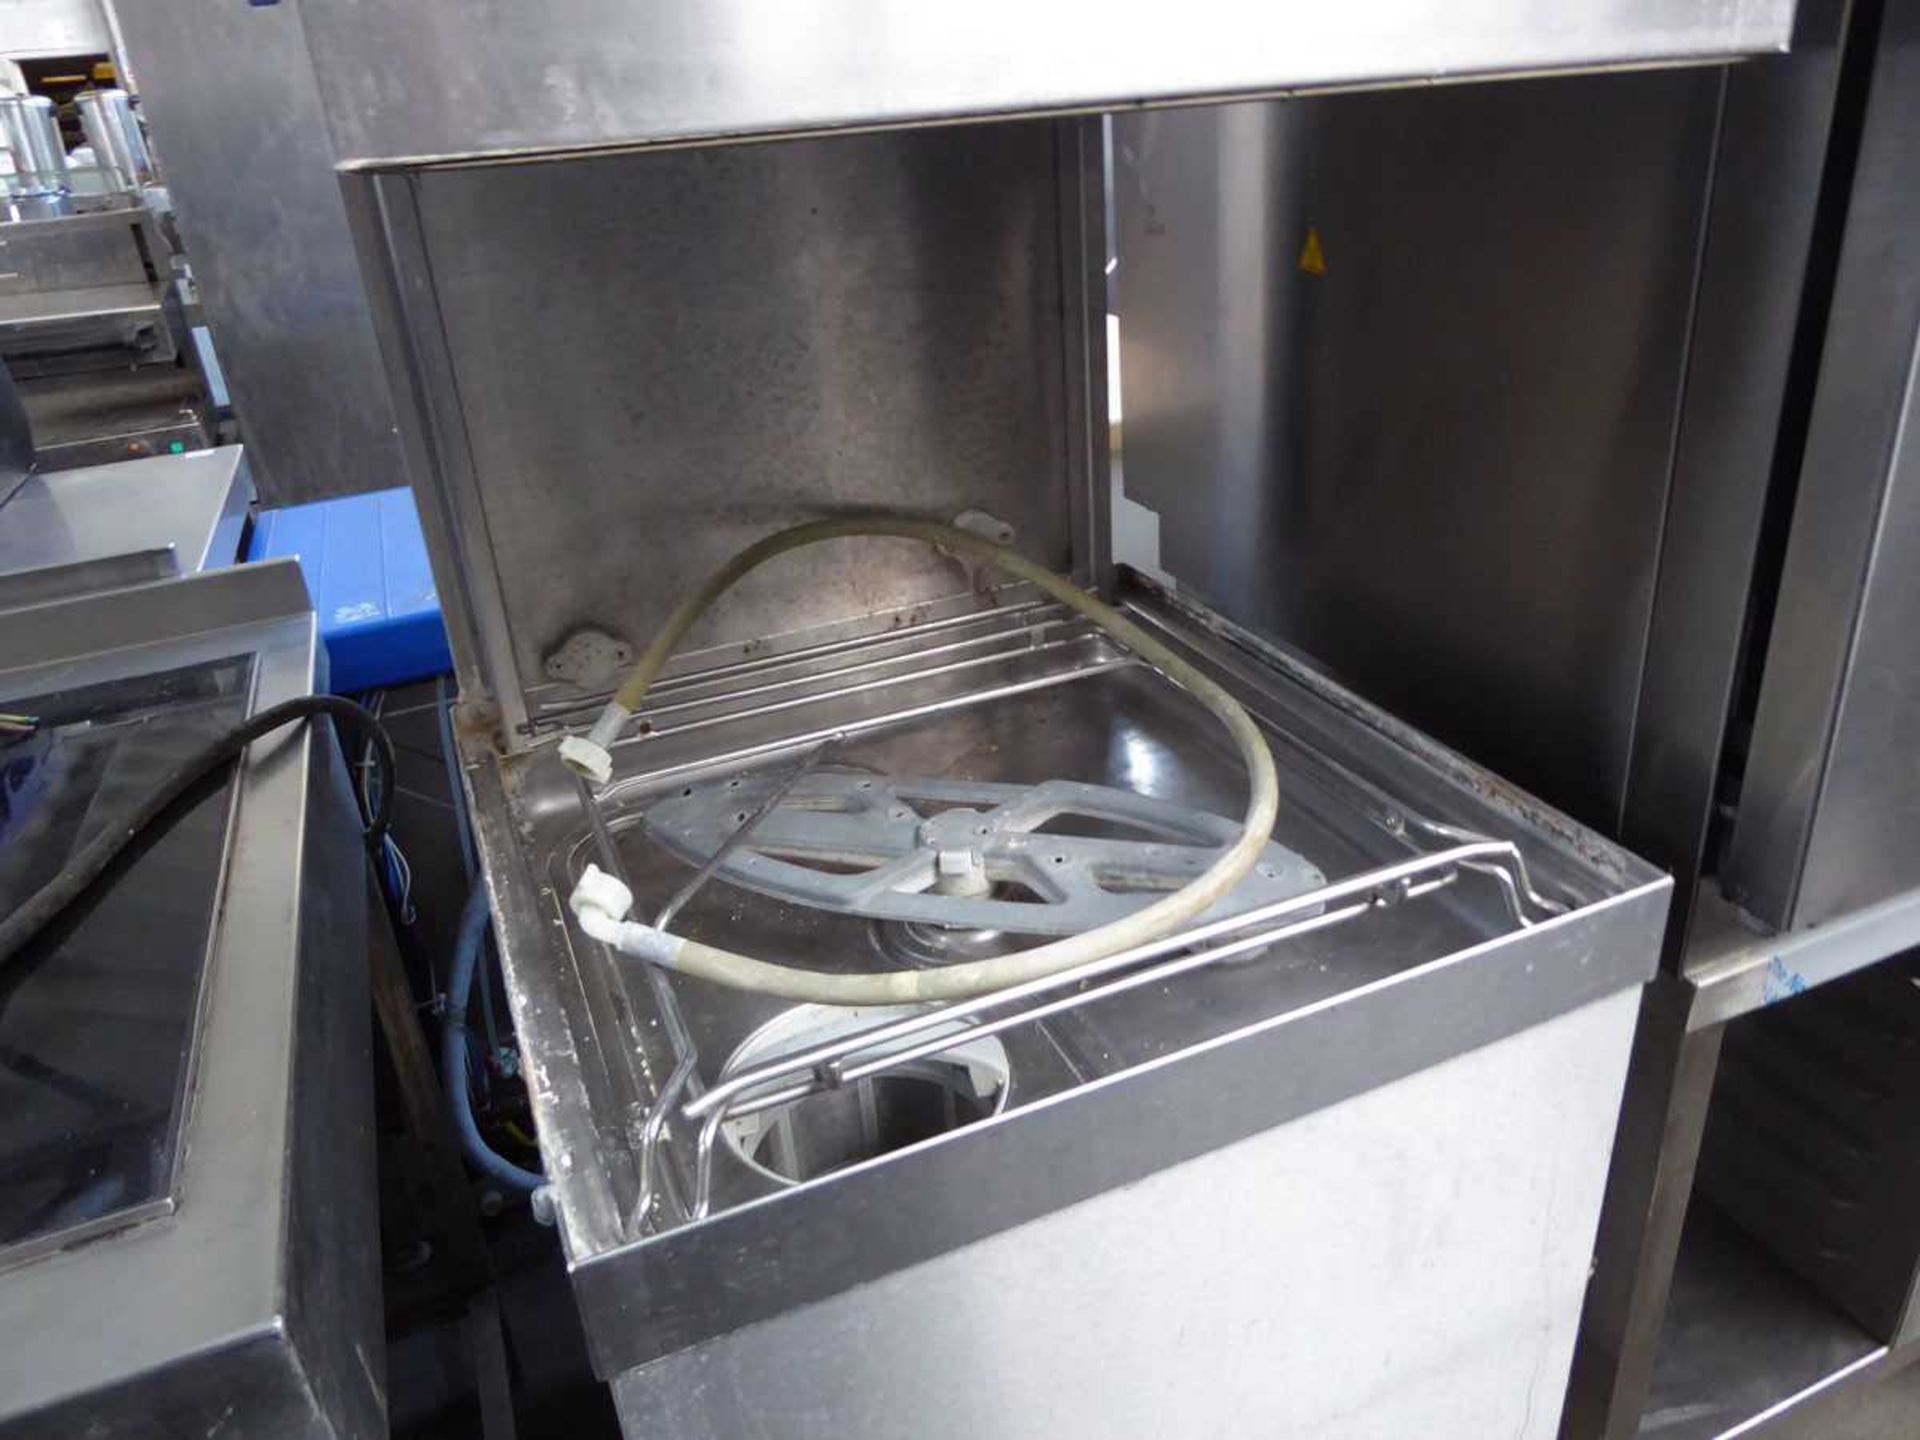 60cm Winterhalter model PT-N lift top pass through dishwasher - Image 2 of 2